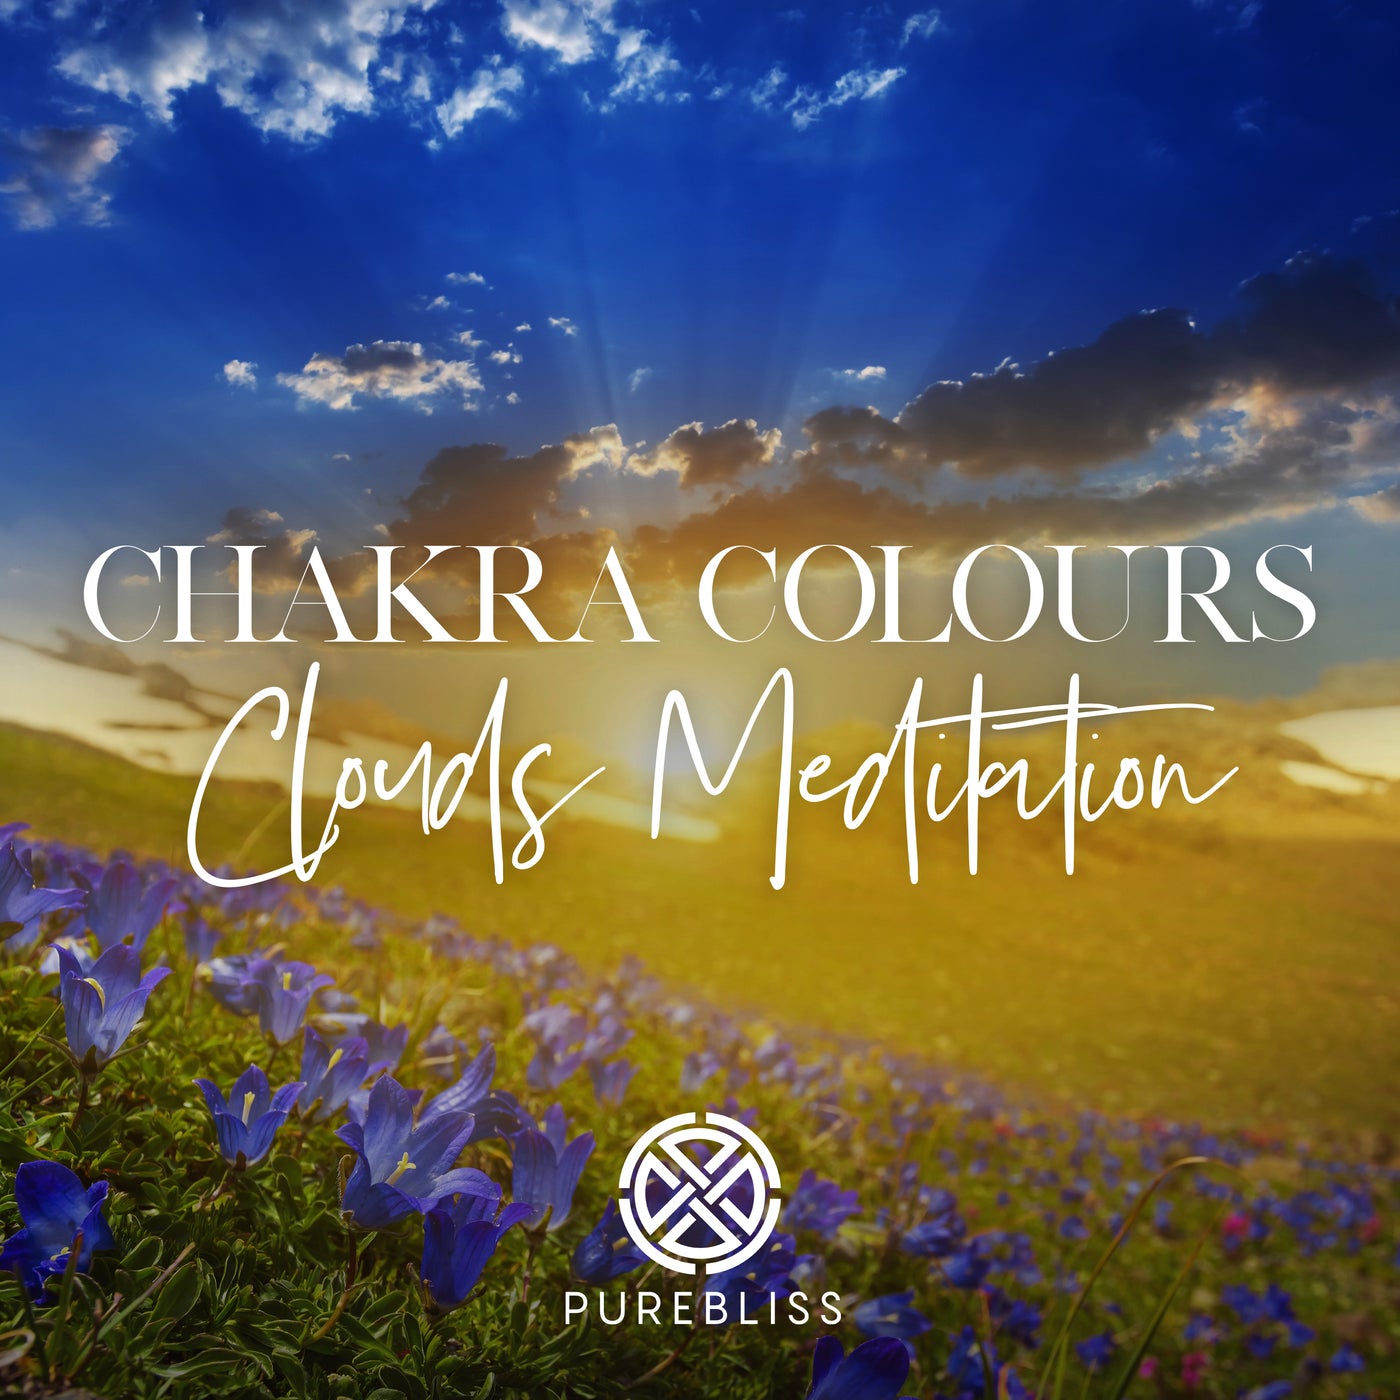 Chakra Colours - Clouds Meditation [PureBliss]